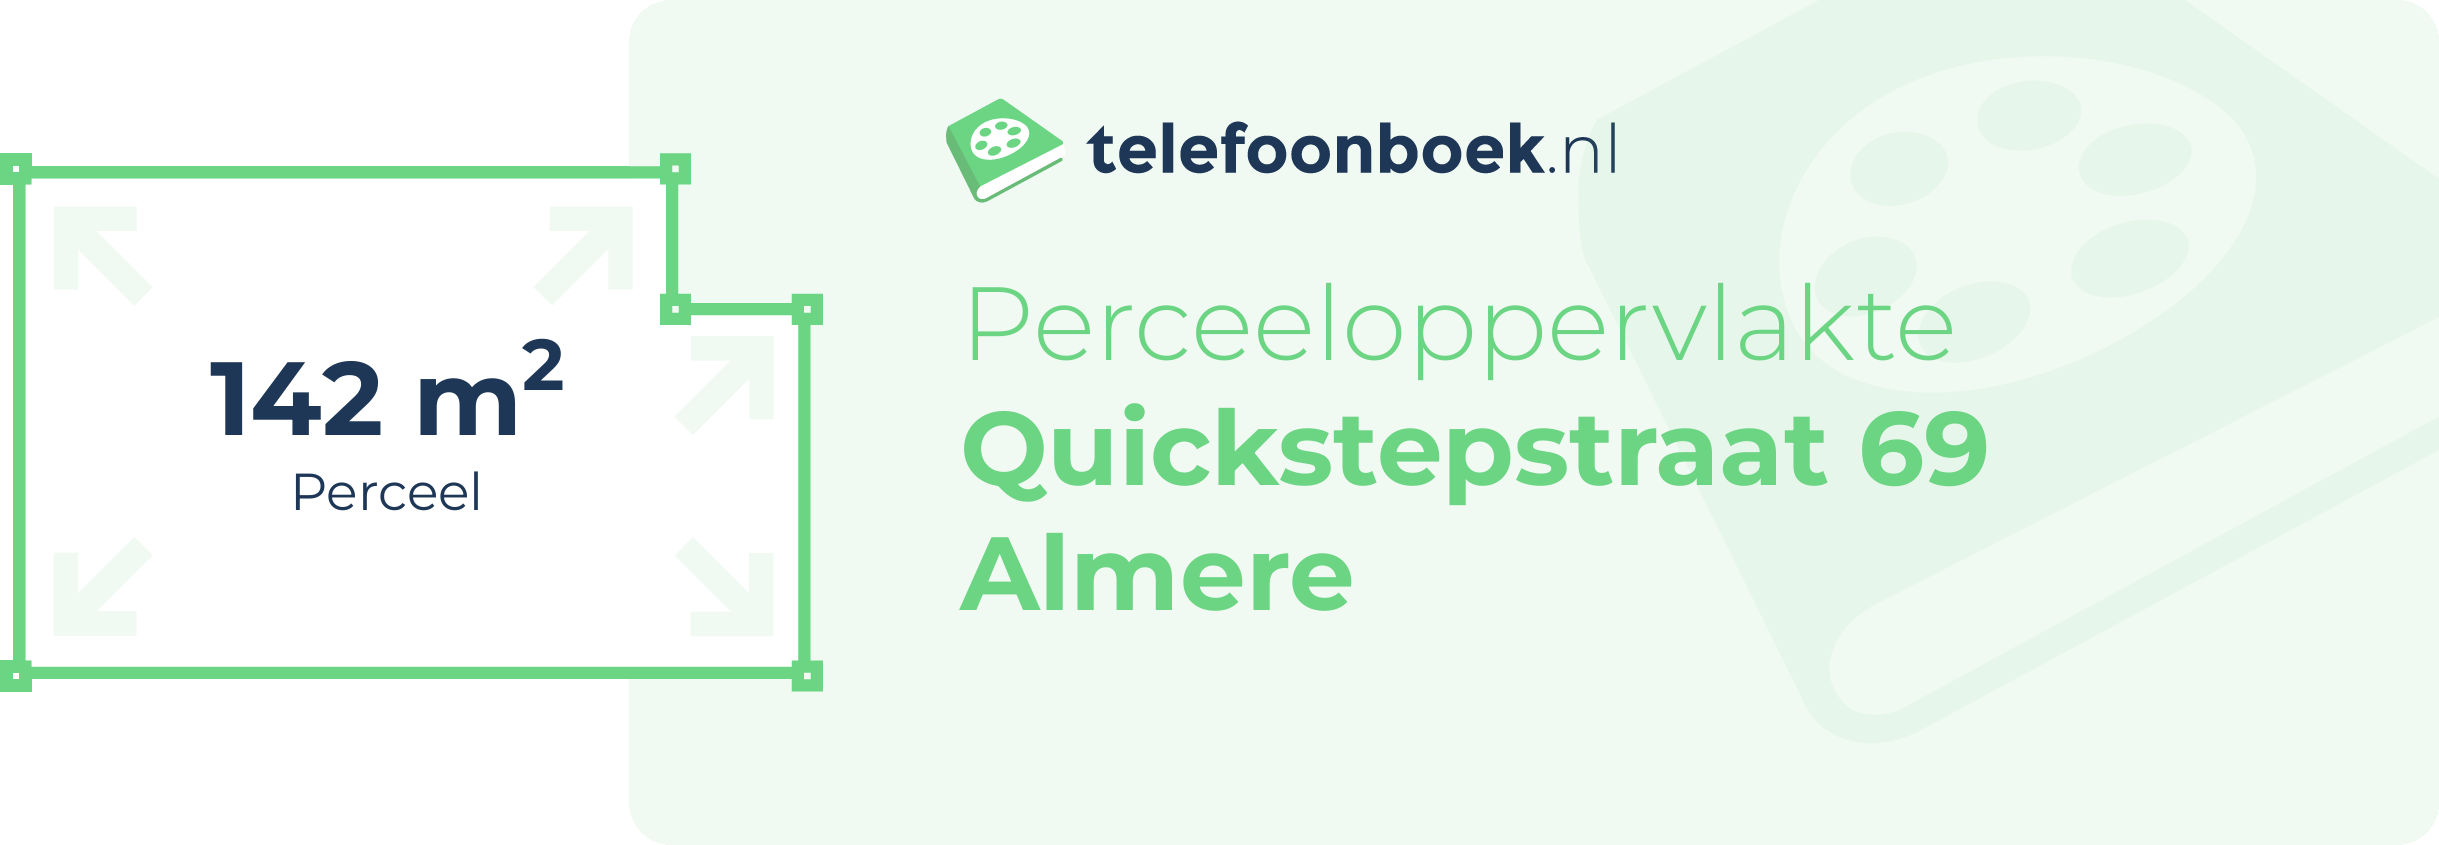 Perceeloppervlakte Quickstepstraat 69 Almere